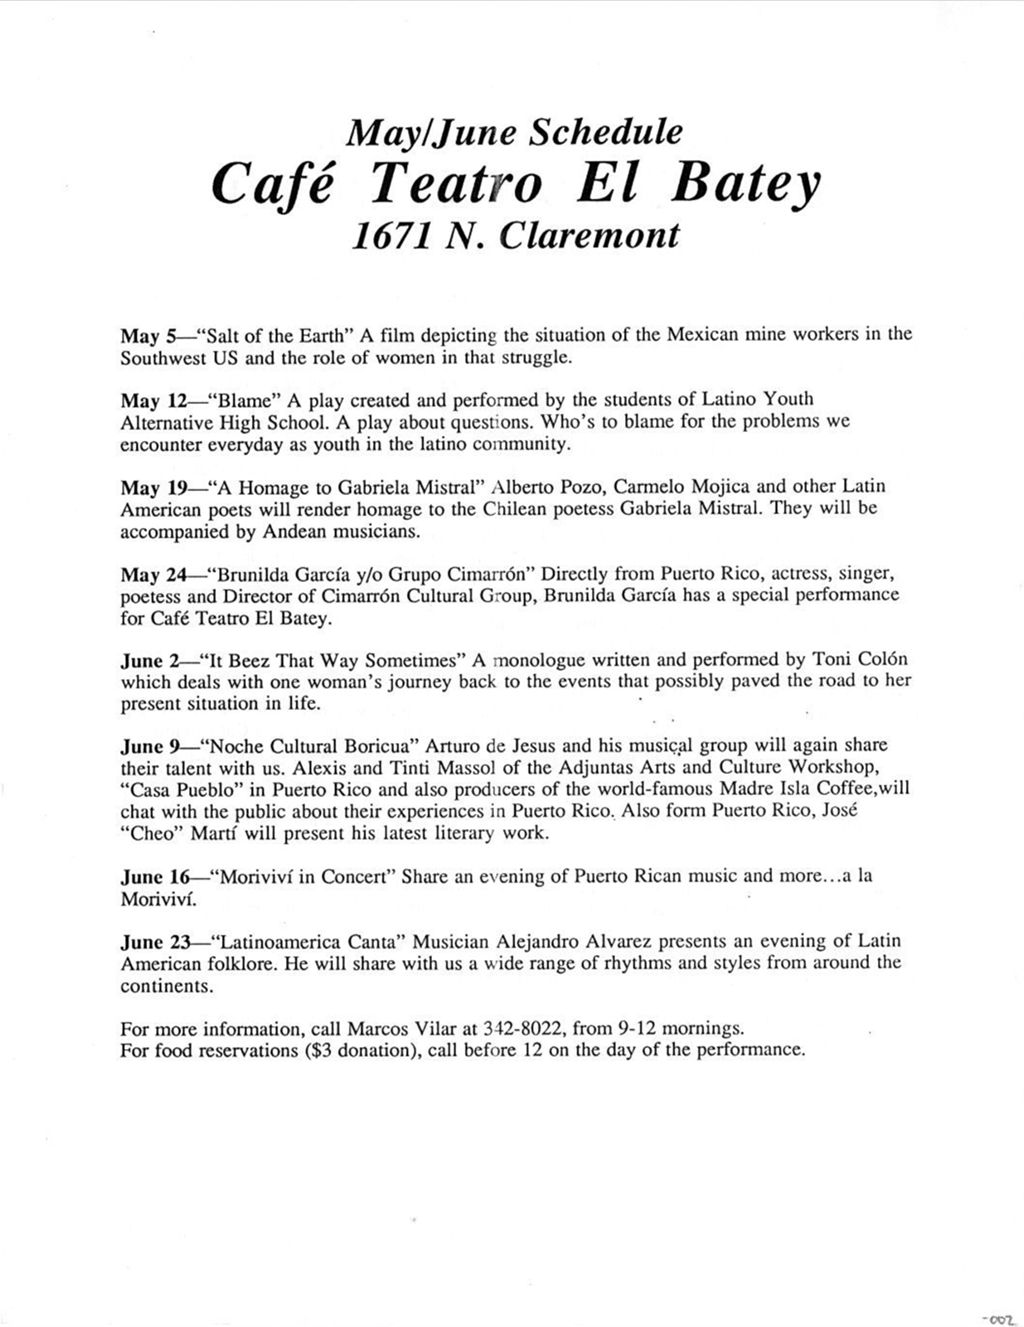 Miniature of May/June Schedule Cafe Teatro El Batey